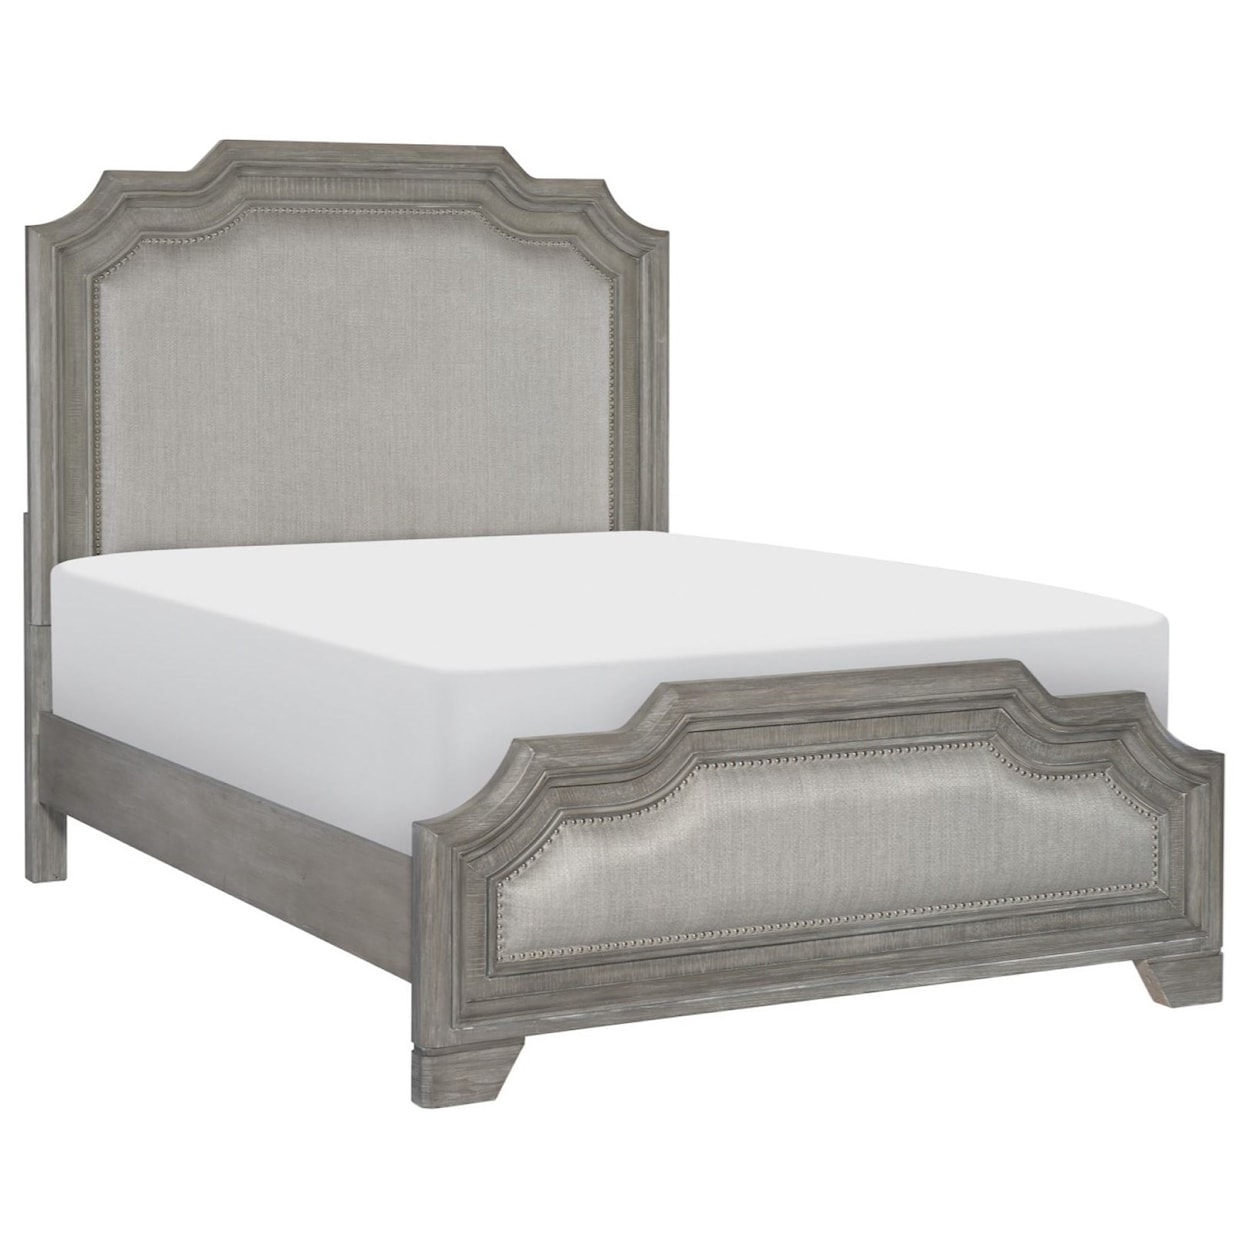 Homelegance Colchester Queen Upholstered Bed